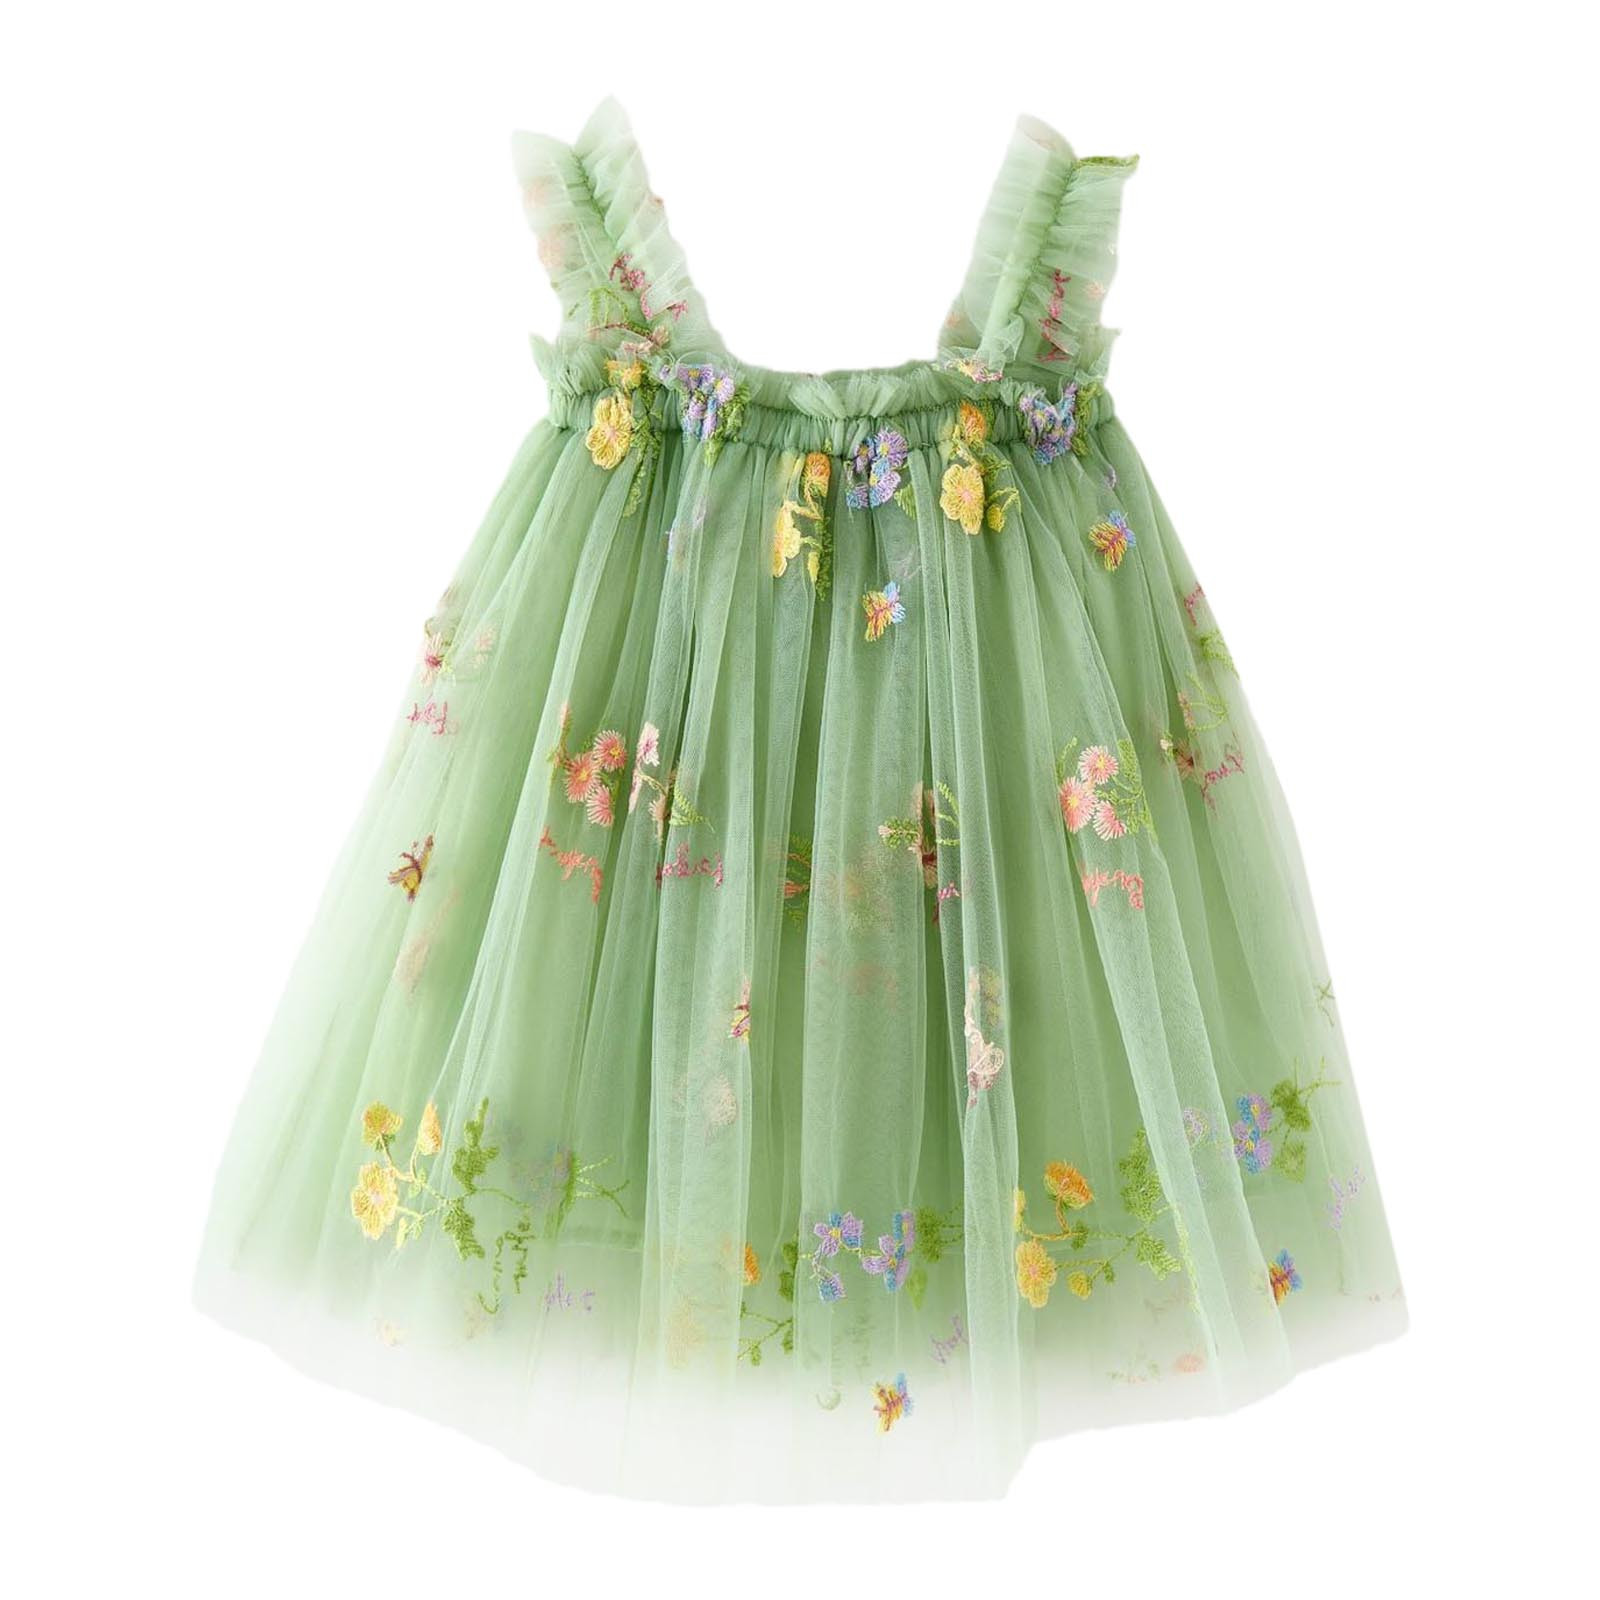 Huashengg Toddler Girls Sleeveless Embroider Princess Dress Dance Party ...